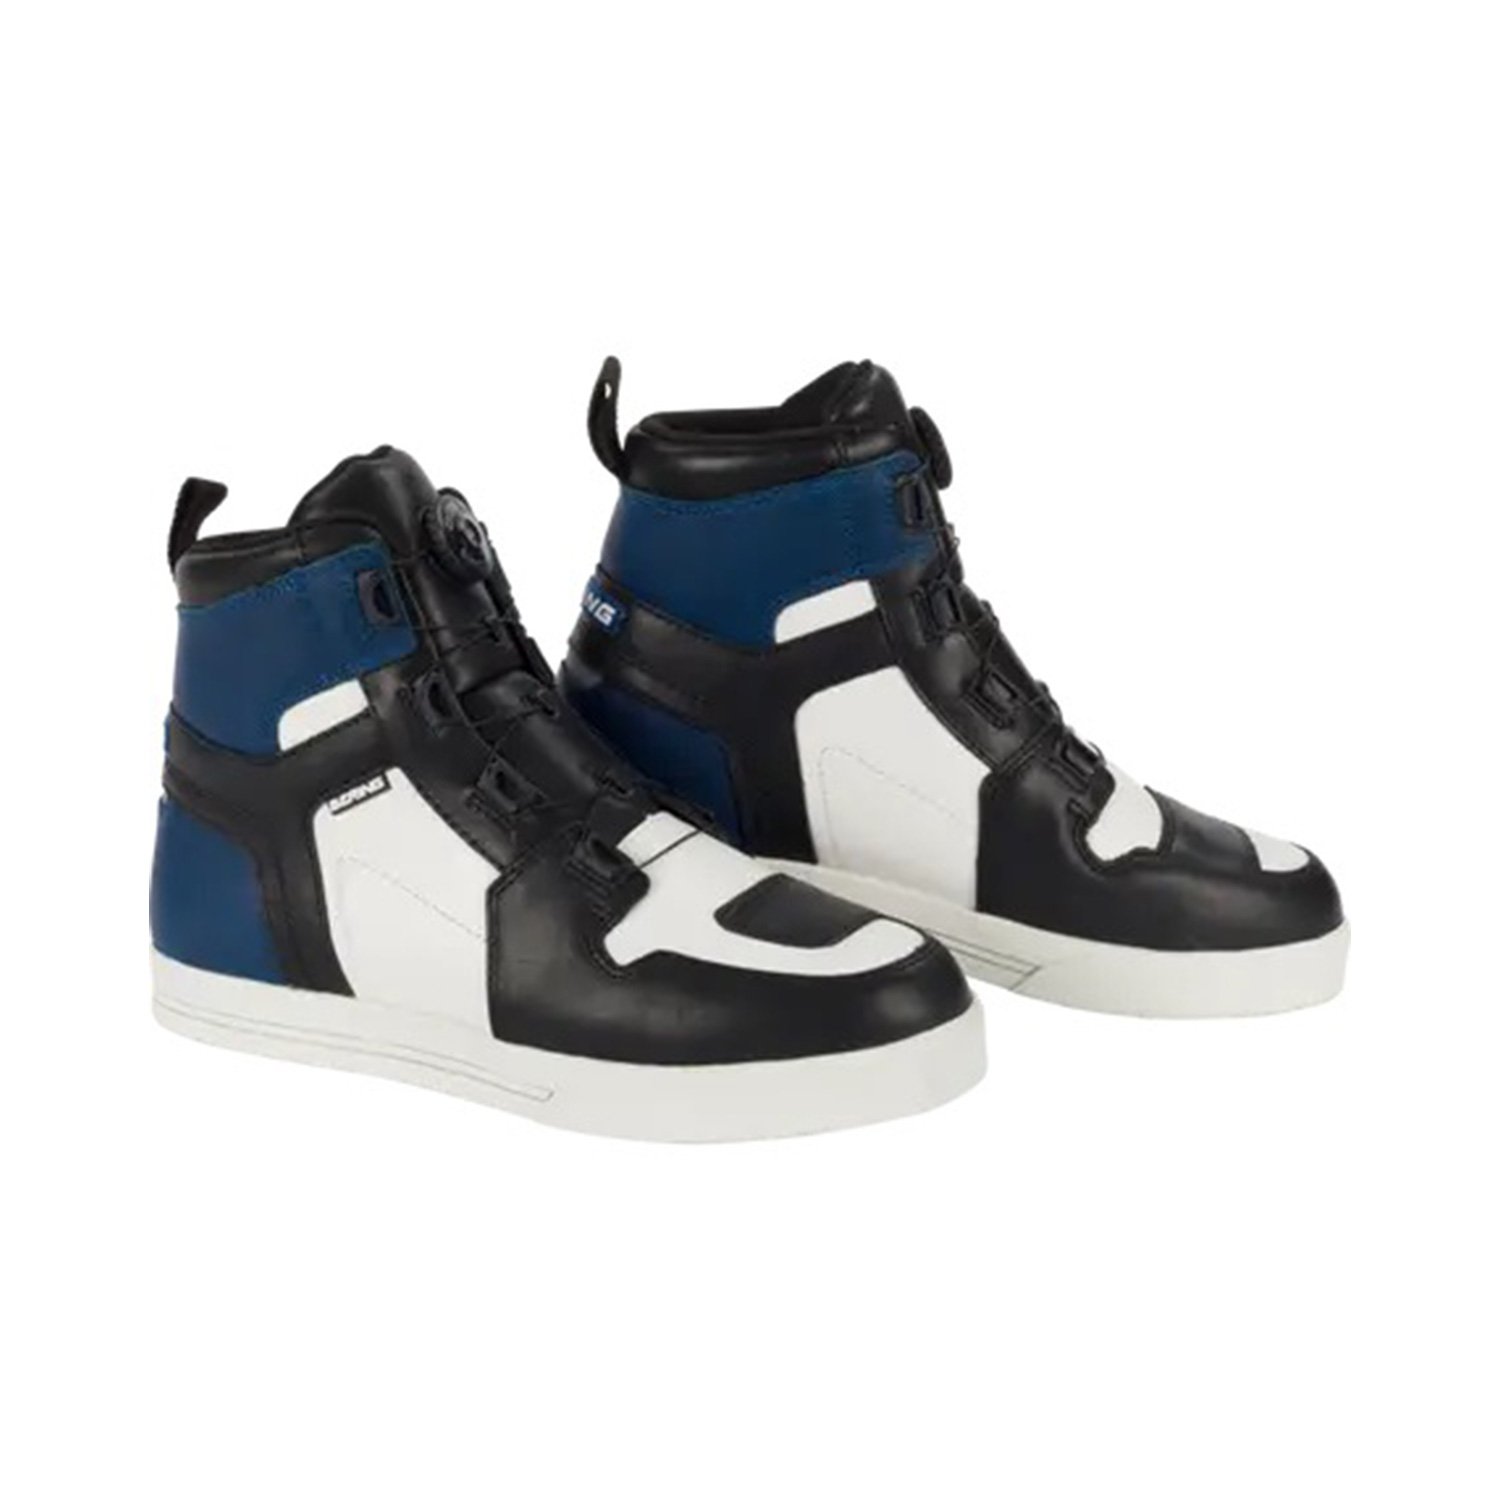 Image of Bering Sneakers Reflex A-Top Black White Blue Size 43 EN